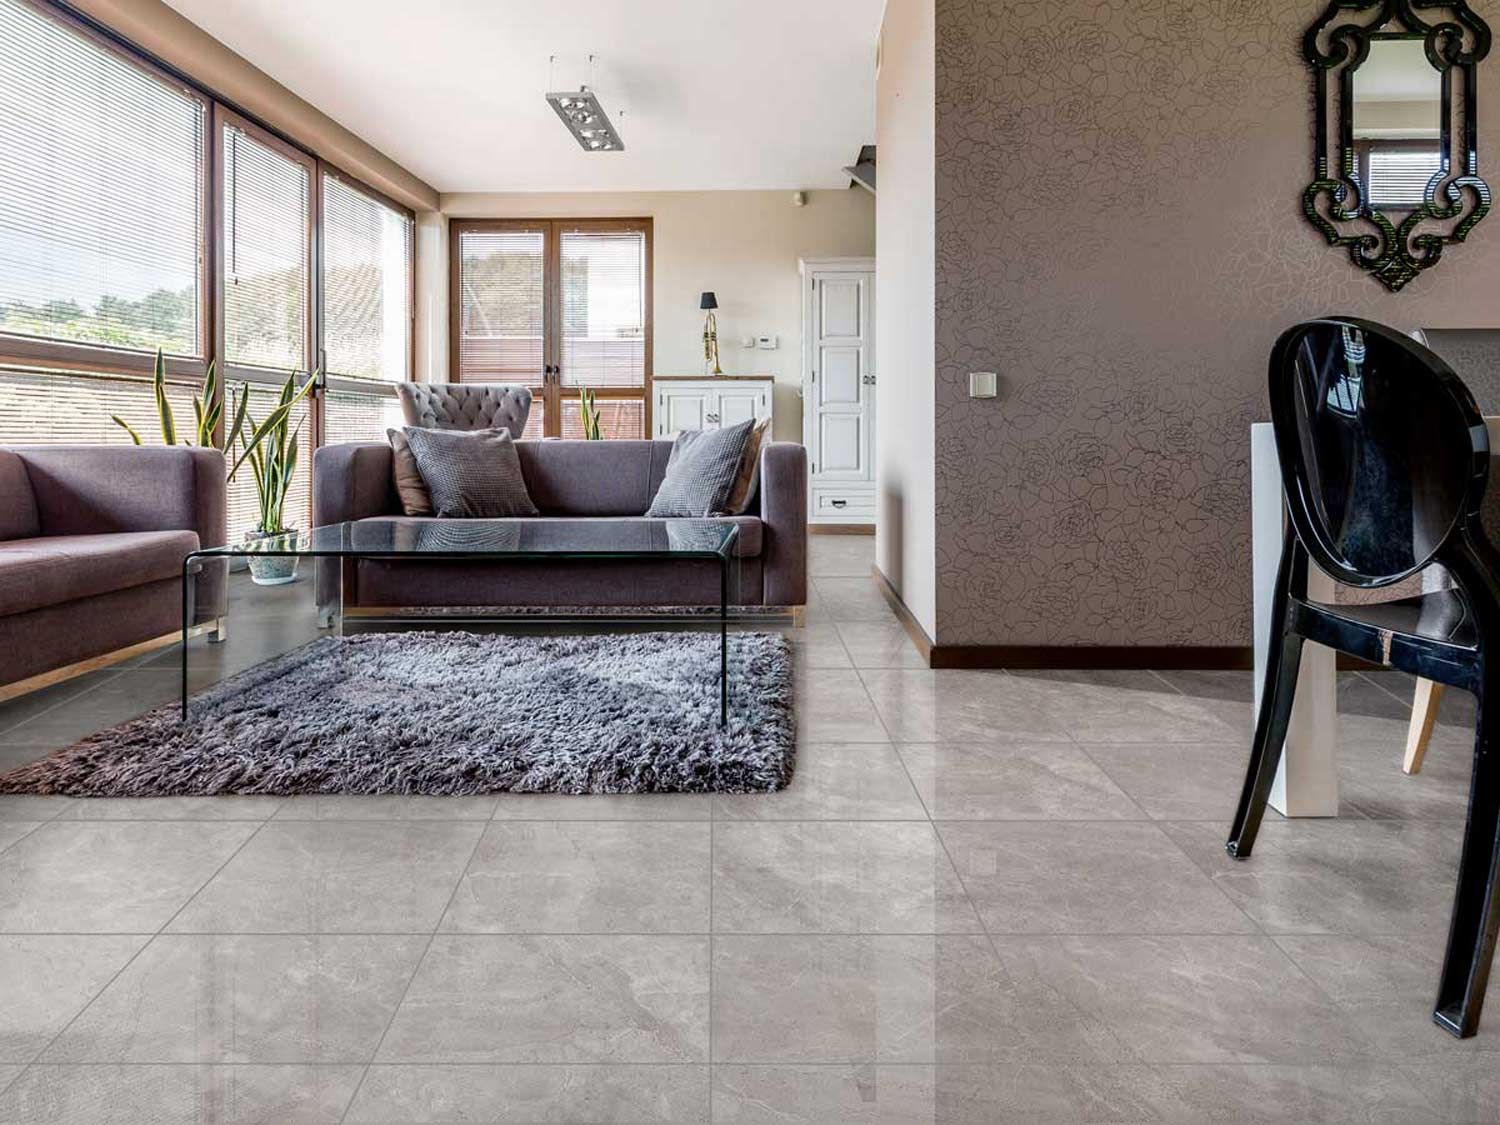 Palala Grey Shiny Ceramic Floor Tile, Grey Tile Living Room Floor